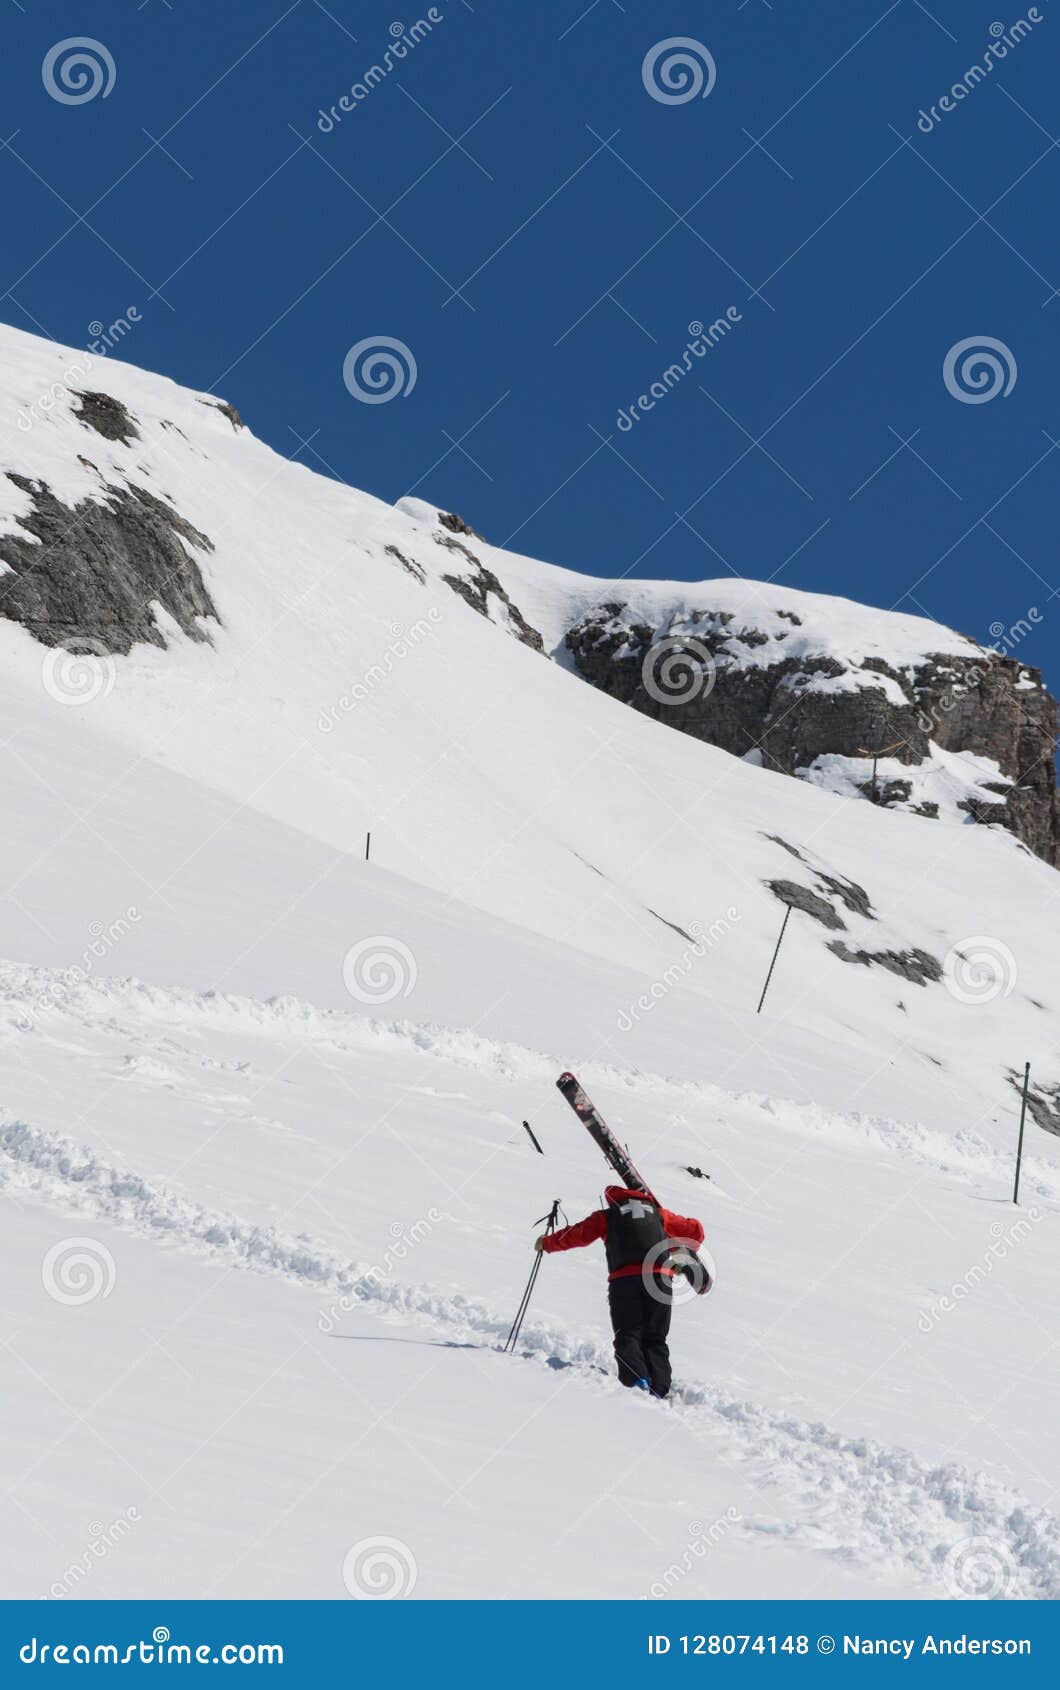 Ski Patrol Climbing Up a Mountain Slope Carrying Large Skis Stock Photo ...